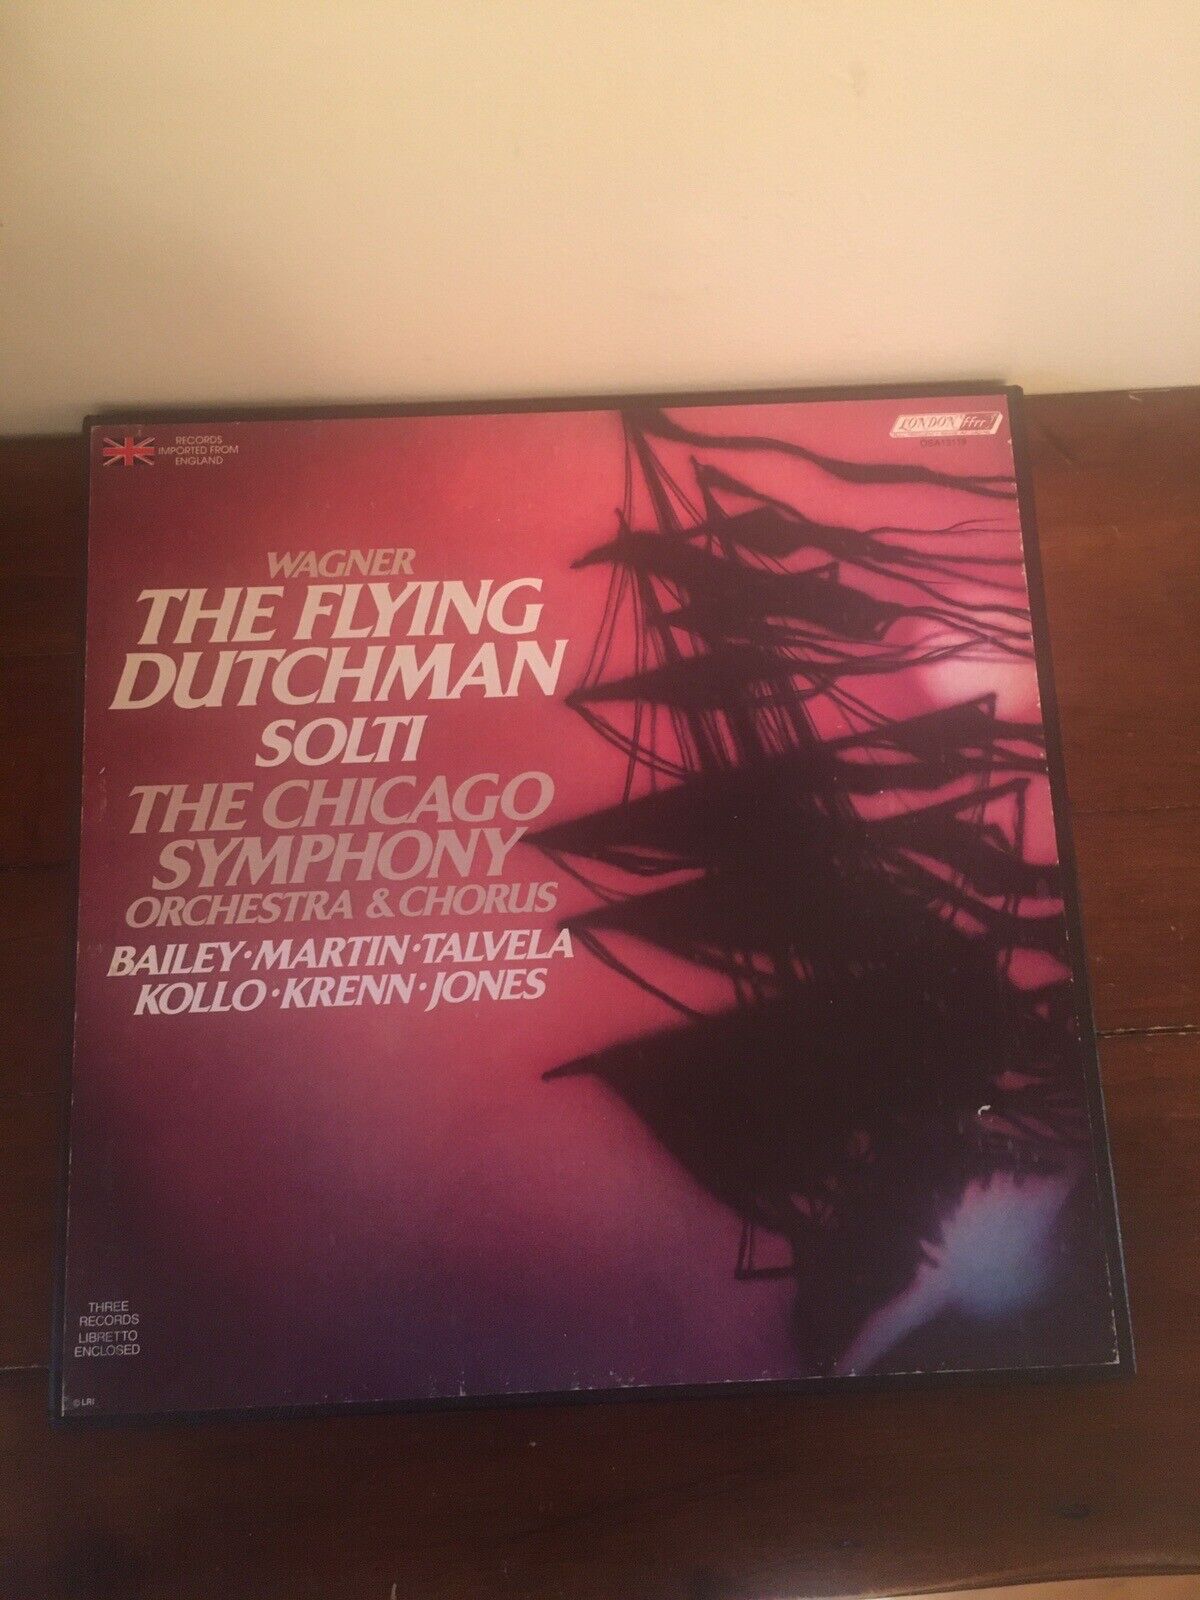 Wagner The Flying Dutchman complete opera Solti Vintage Lp Vinyl Record Set